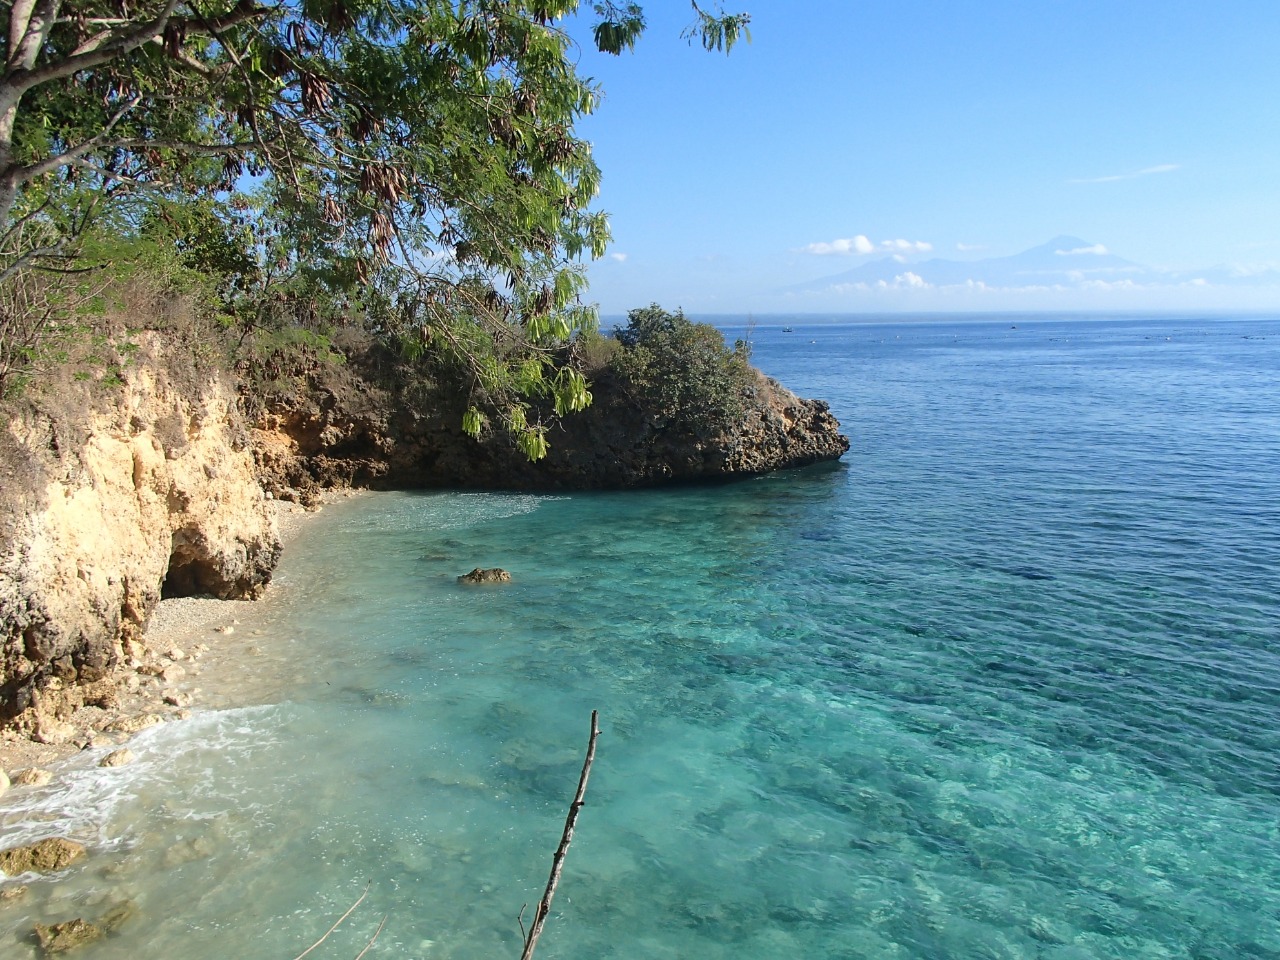 Foto di Tanjung Sabui con una superficie del acqua cristallina